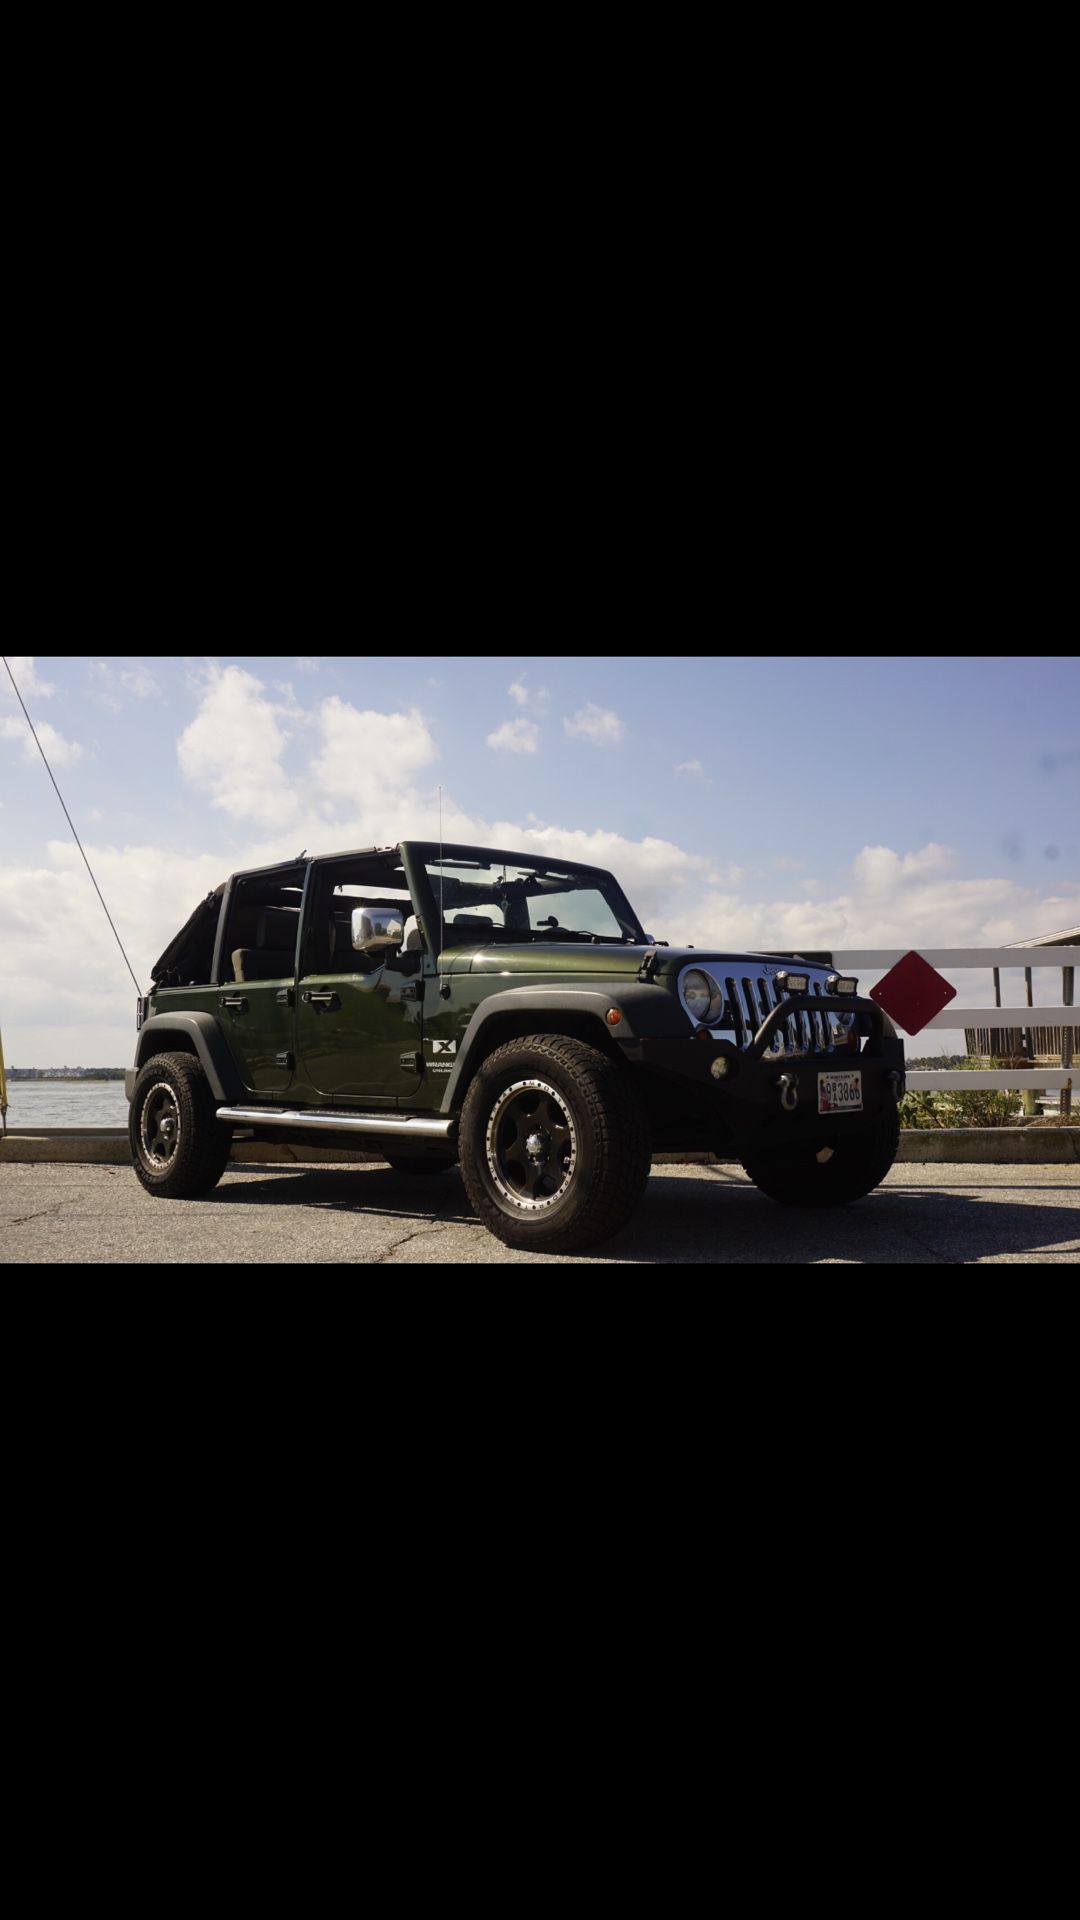 2008 4dr Jeep Wrangler